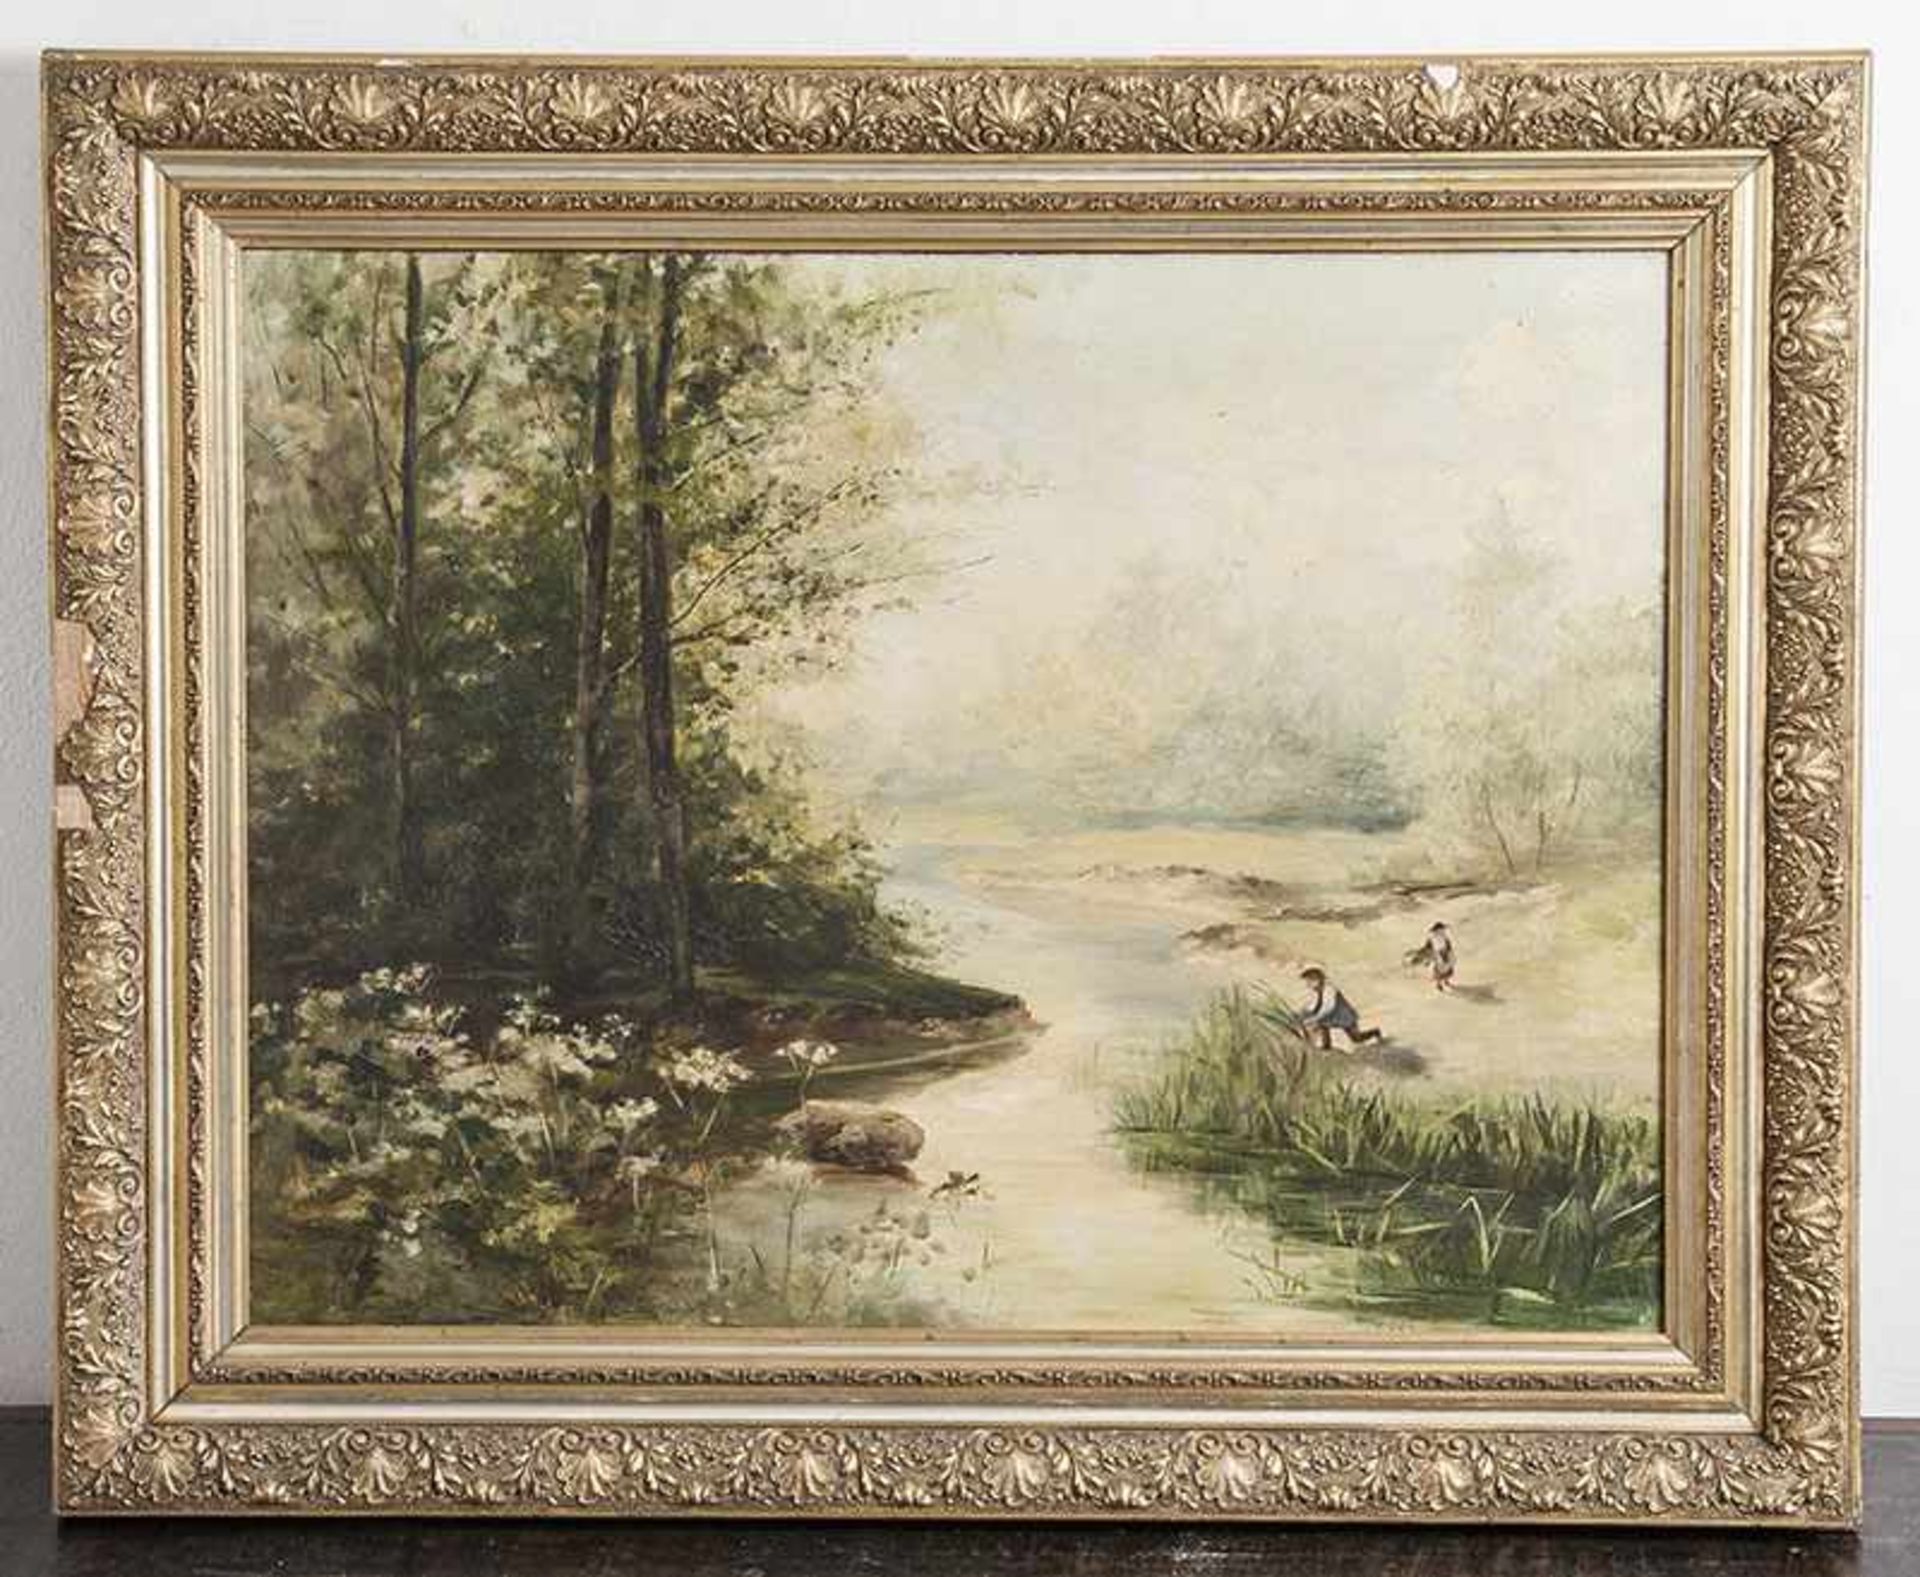 Unbekannter Künstler (20. Jahrhundert), Schilfsammler am Flußufer, Öl/Lw. Ca. 56 x 73 cm,gerahmt.